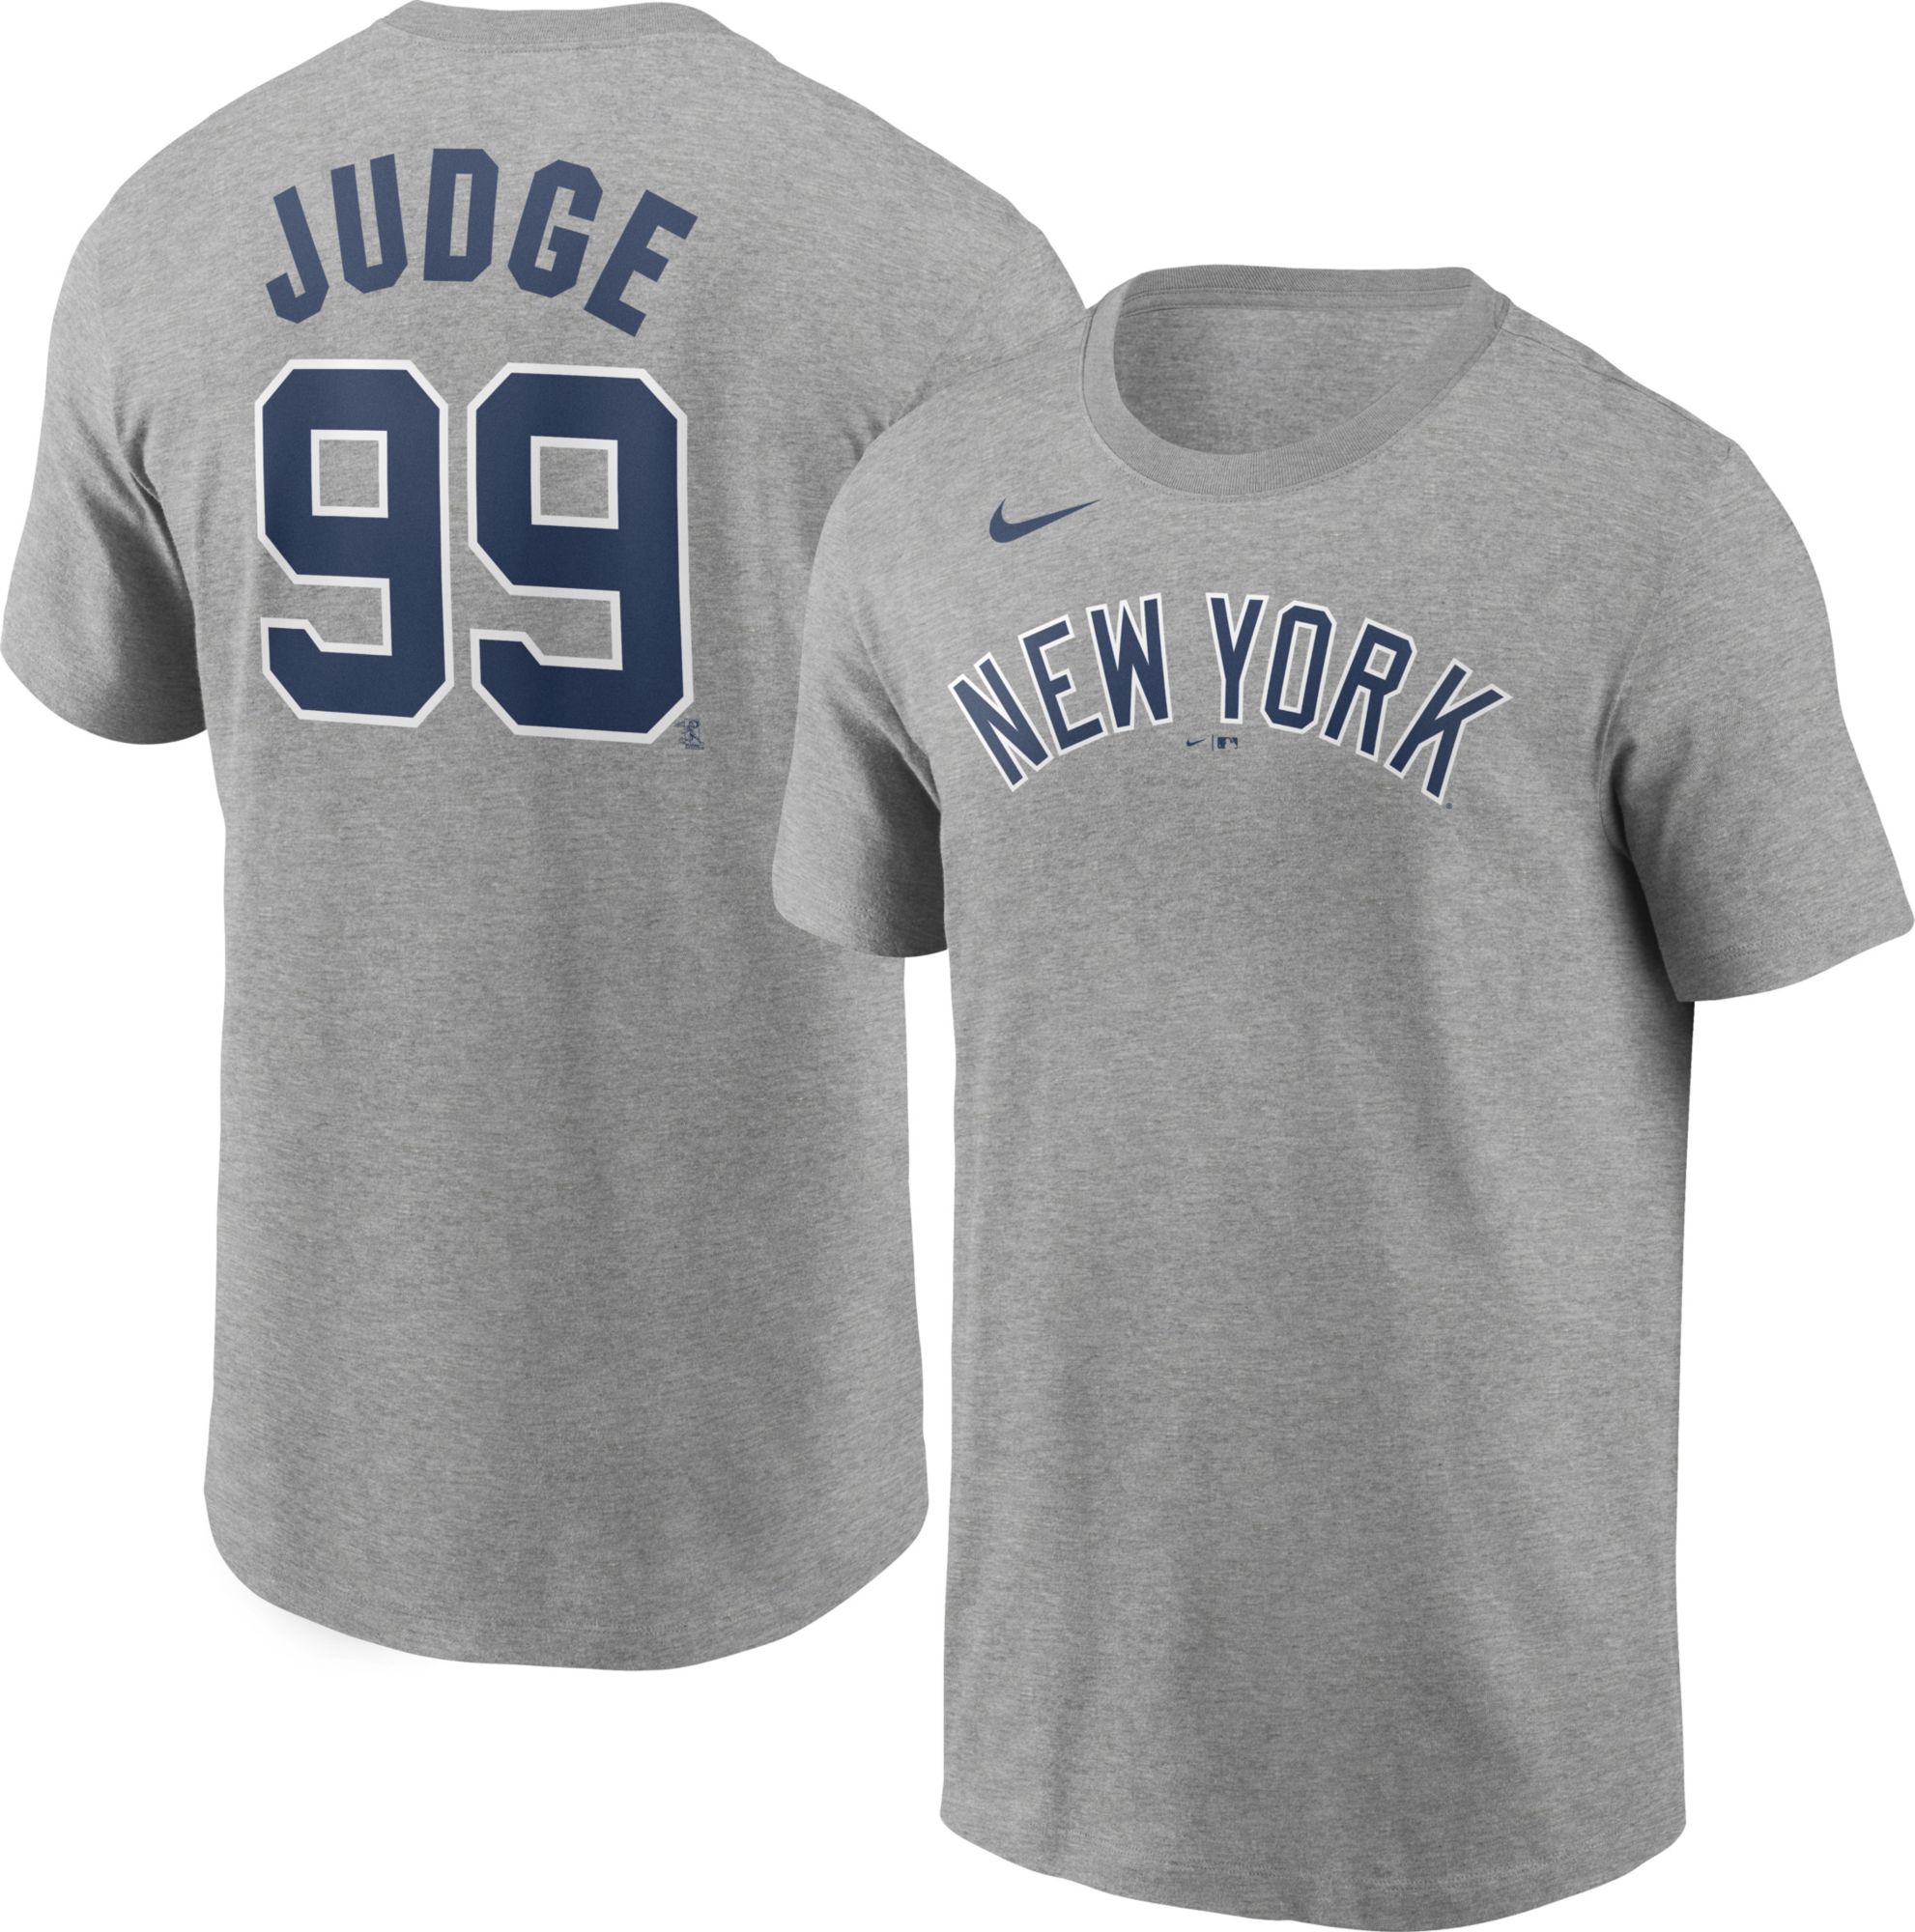 Nike Aaron Judge 99 T-Shirt - Forelle Teamsports - American